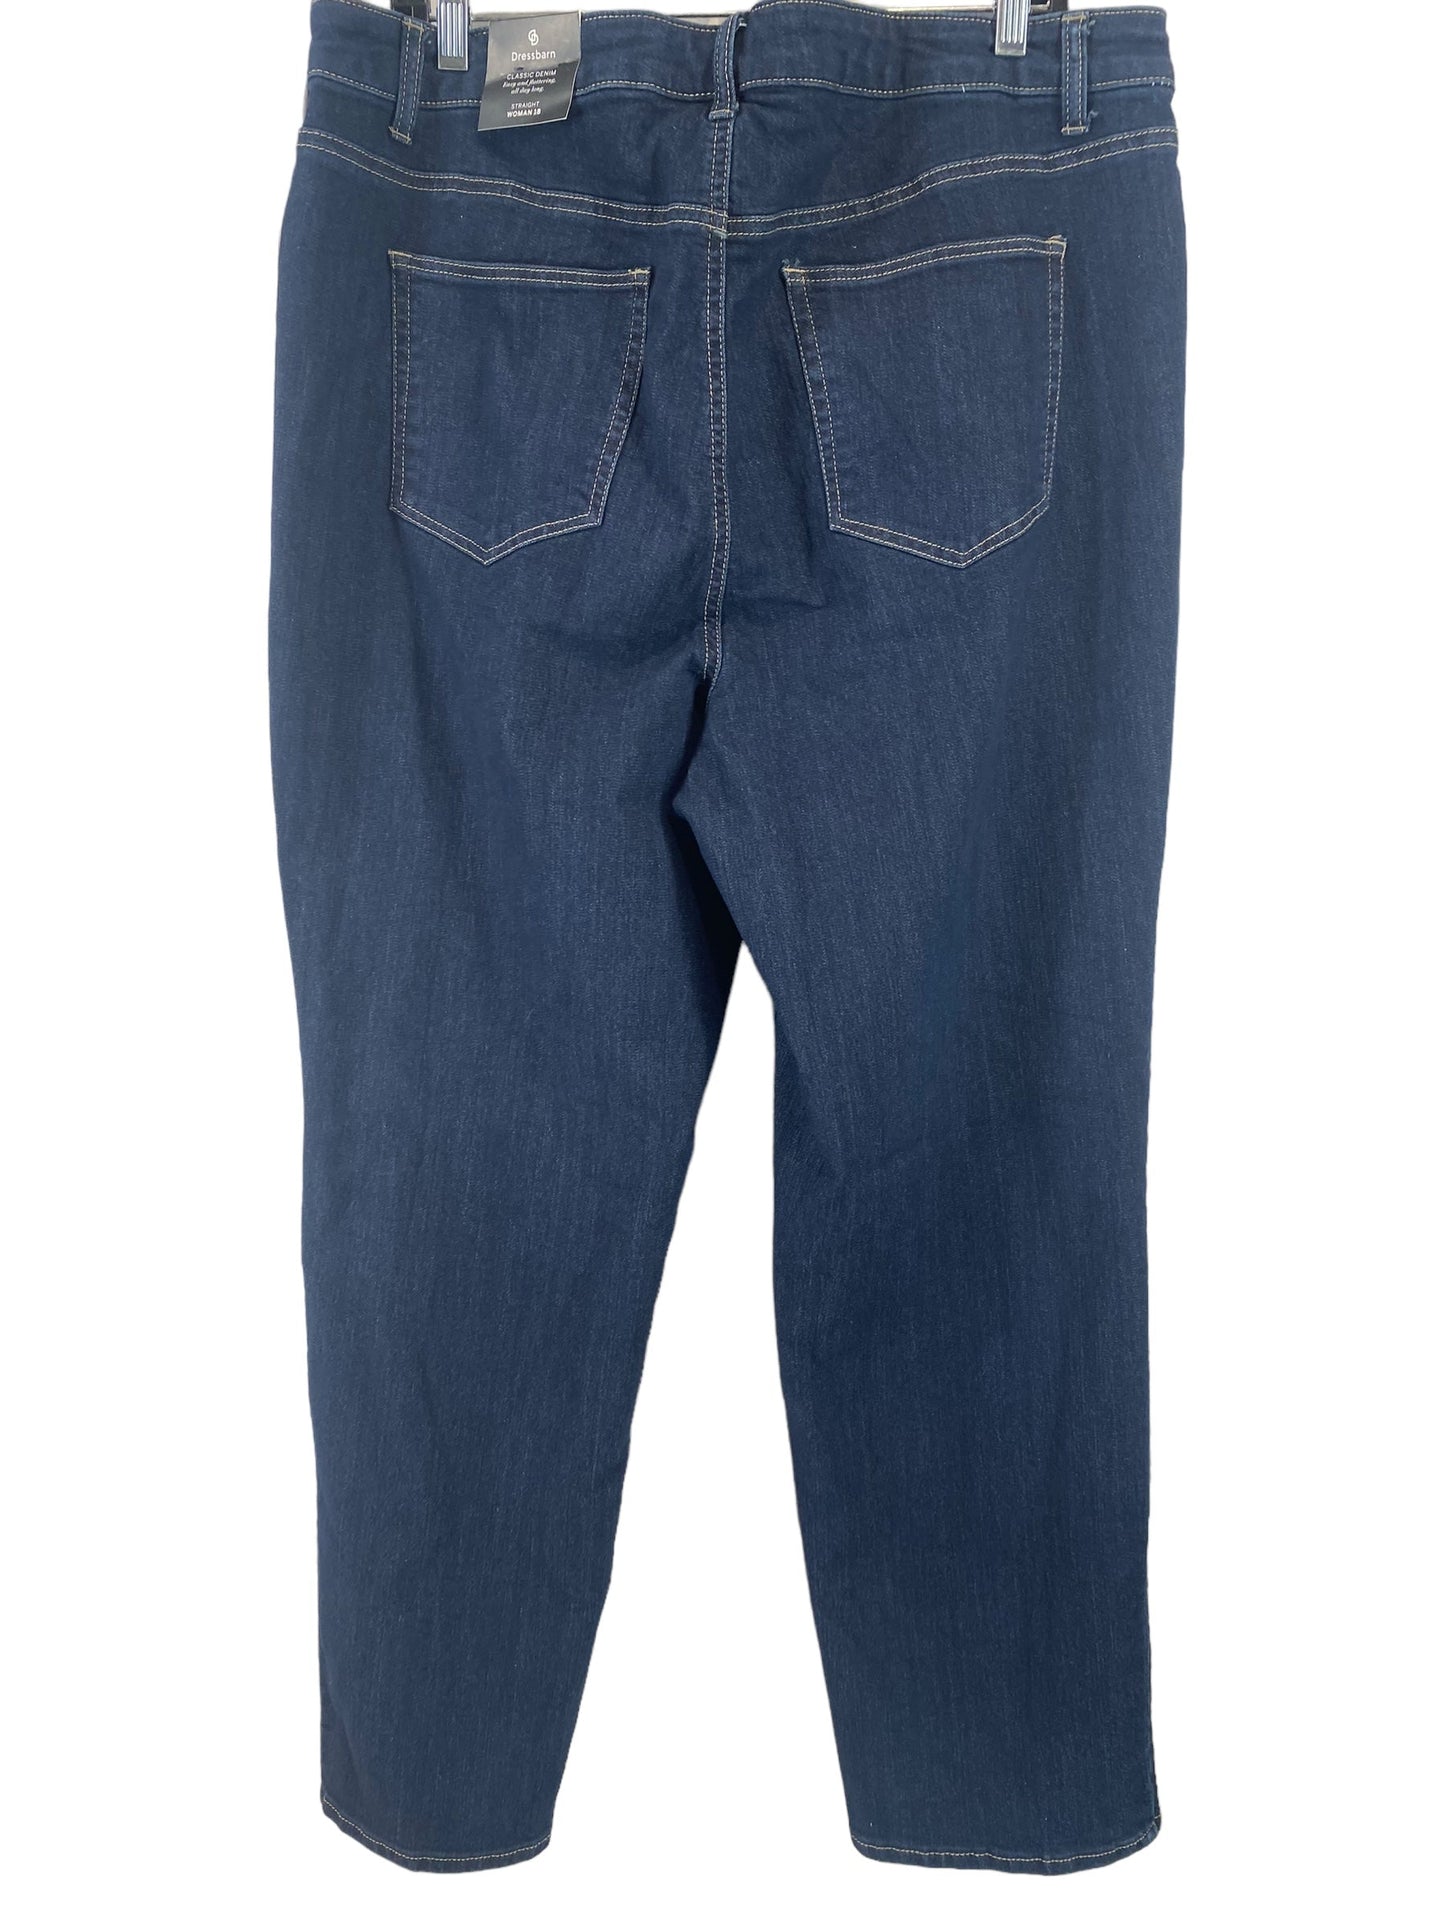 Blue Denim Jeans Straight Dressbarn, Size 18